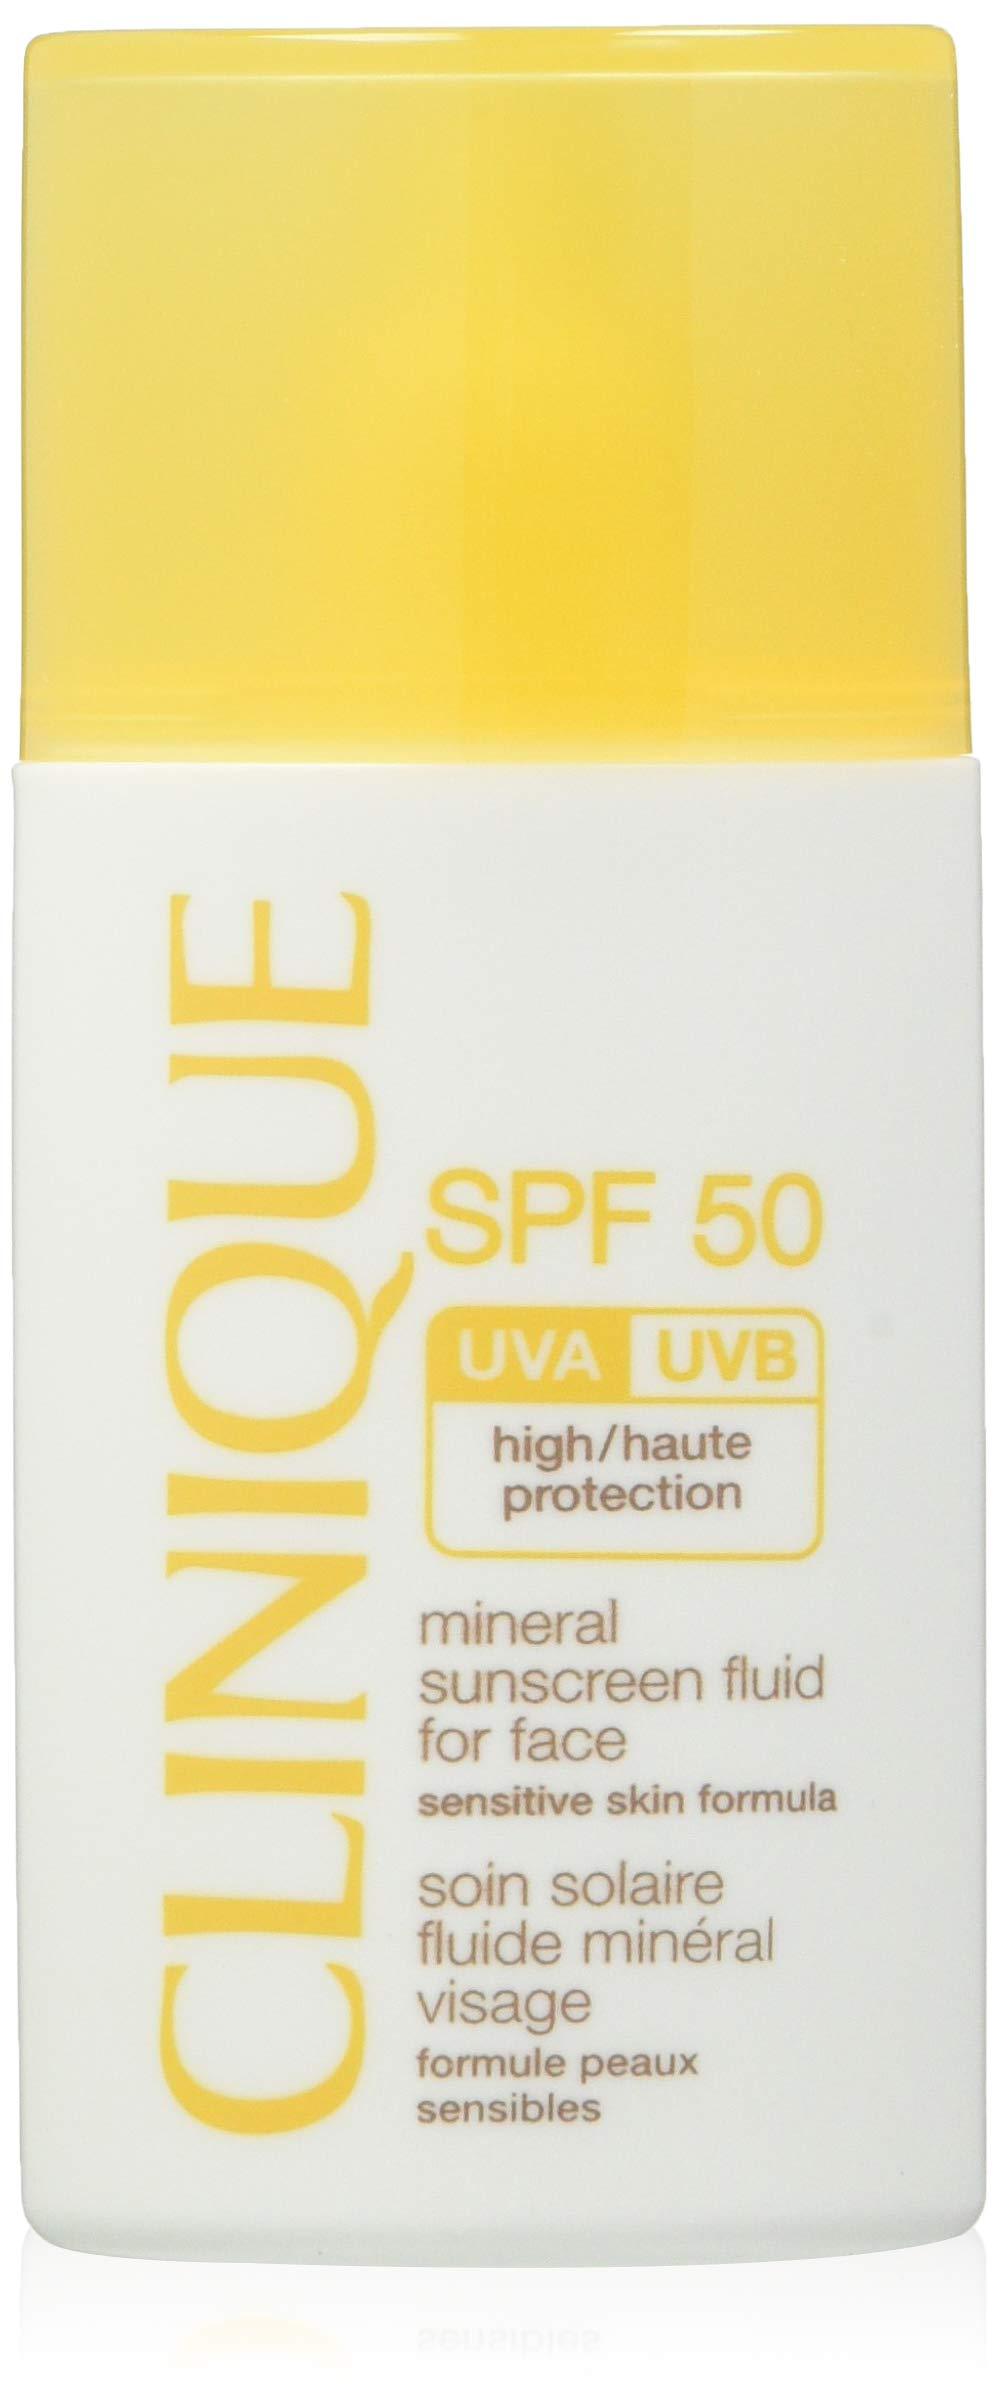 Clinique gezichtscrème - Face Mineral Liquid SPF 50, per stuk verpakt, 30 ml - NewNest Australia